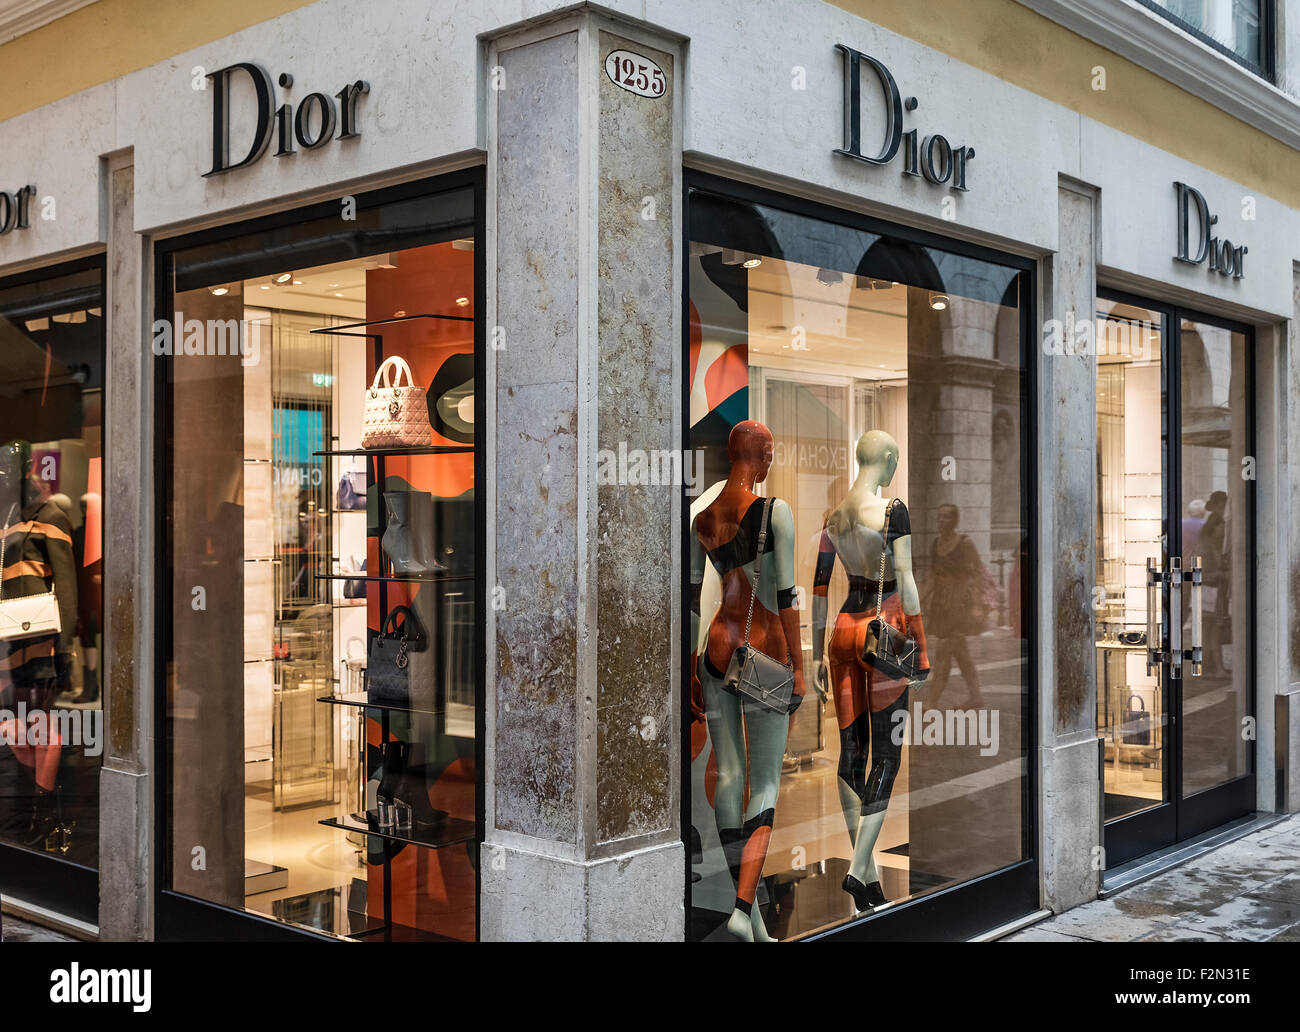 Dior retail clothing store, Venice, Italy Stock Photo - Alamy